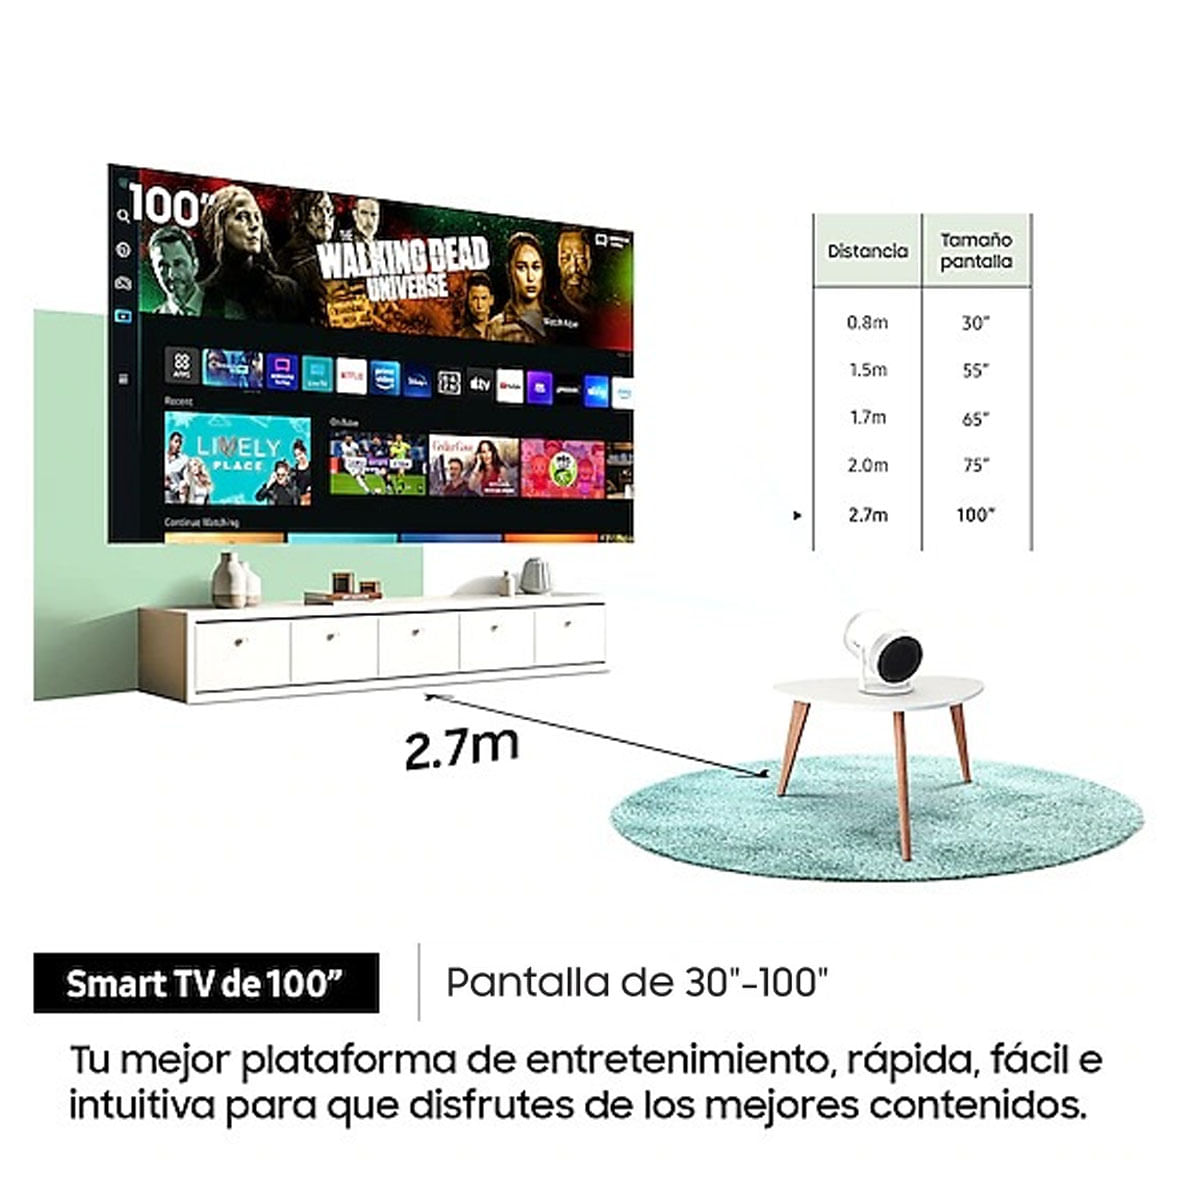 Smart TV The FreeStyle - Proyector portable 30-100 (pulgadas